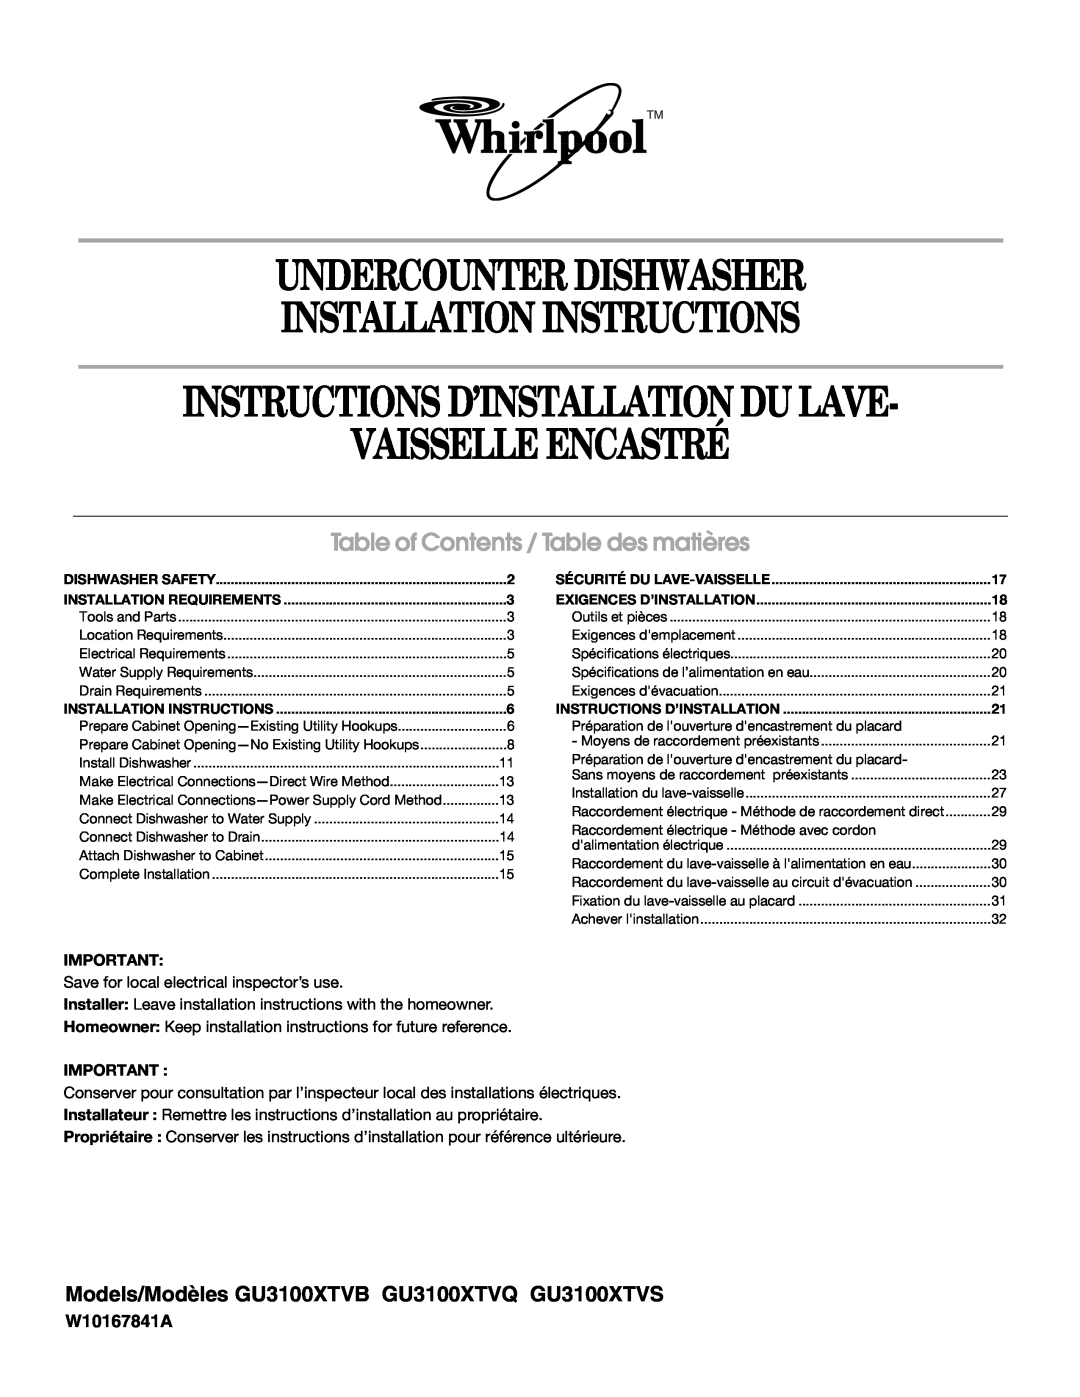 Whirlpool GU3100XTVQ installation instructions Table of Contents / Table des matières, Vaisselleencastré, W10167841A 